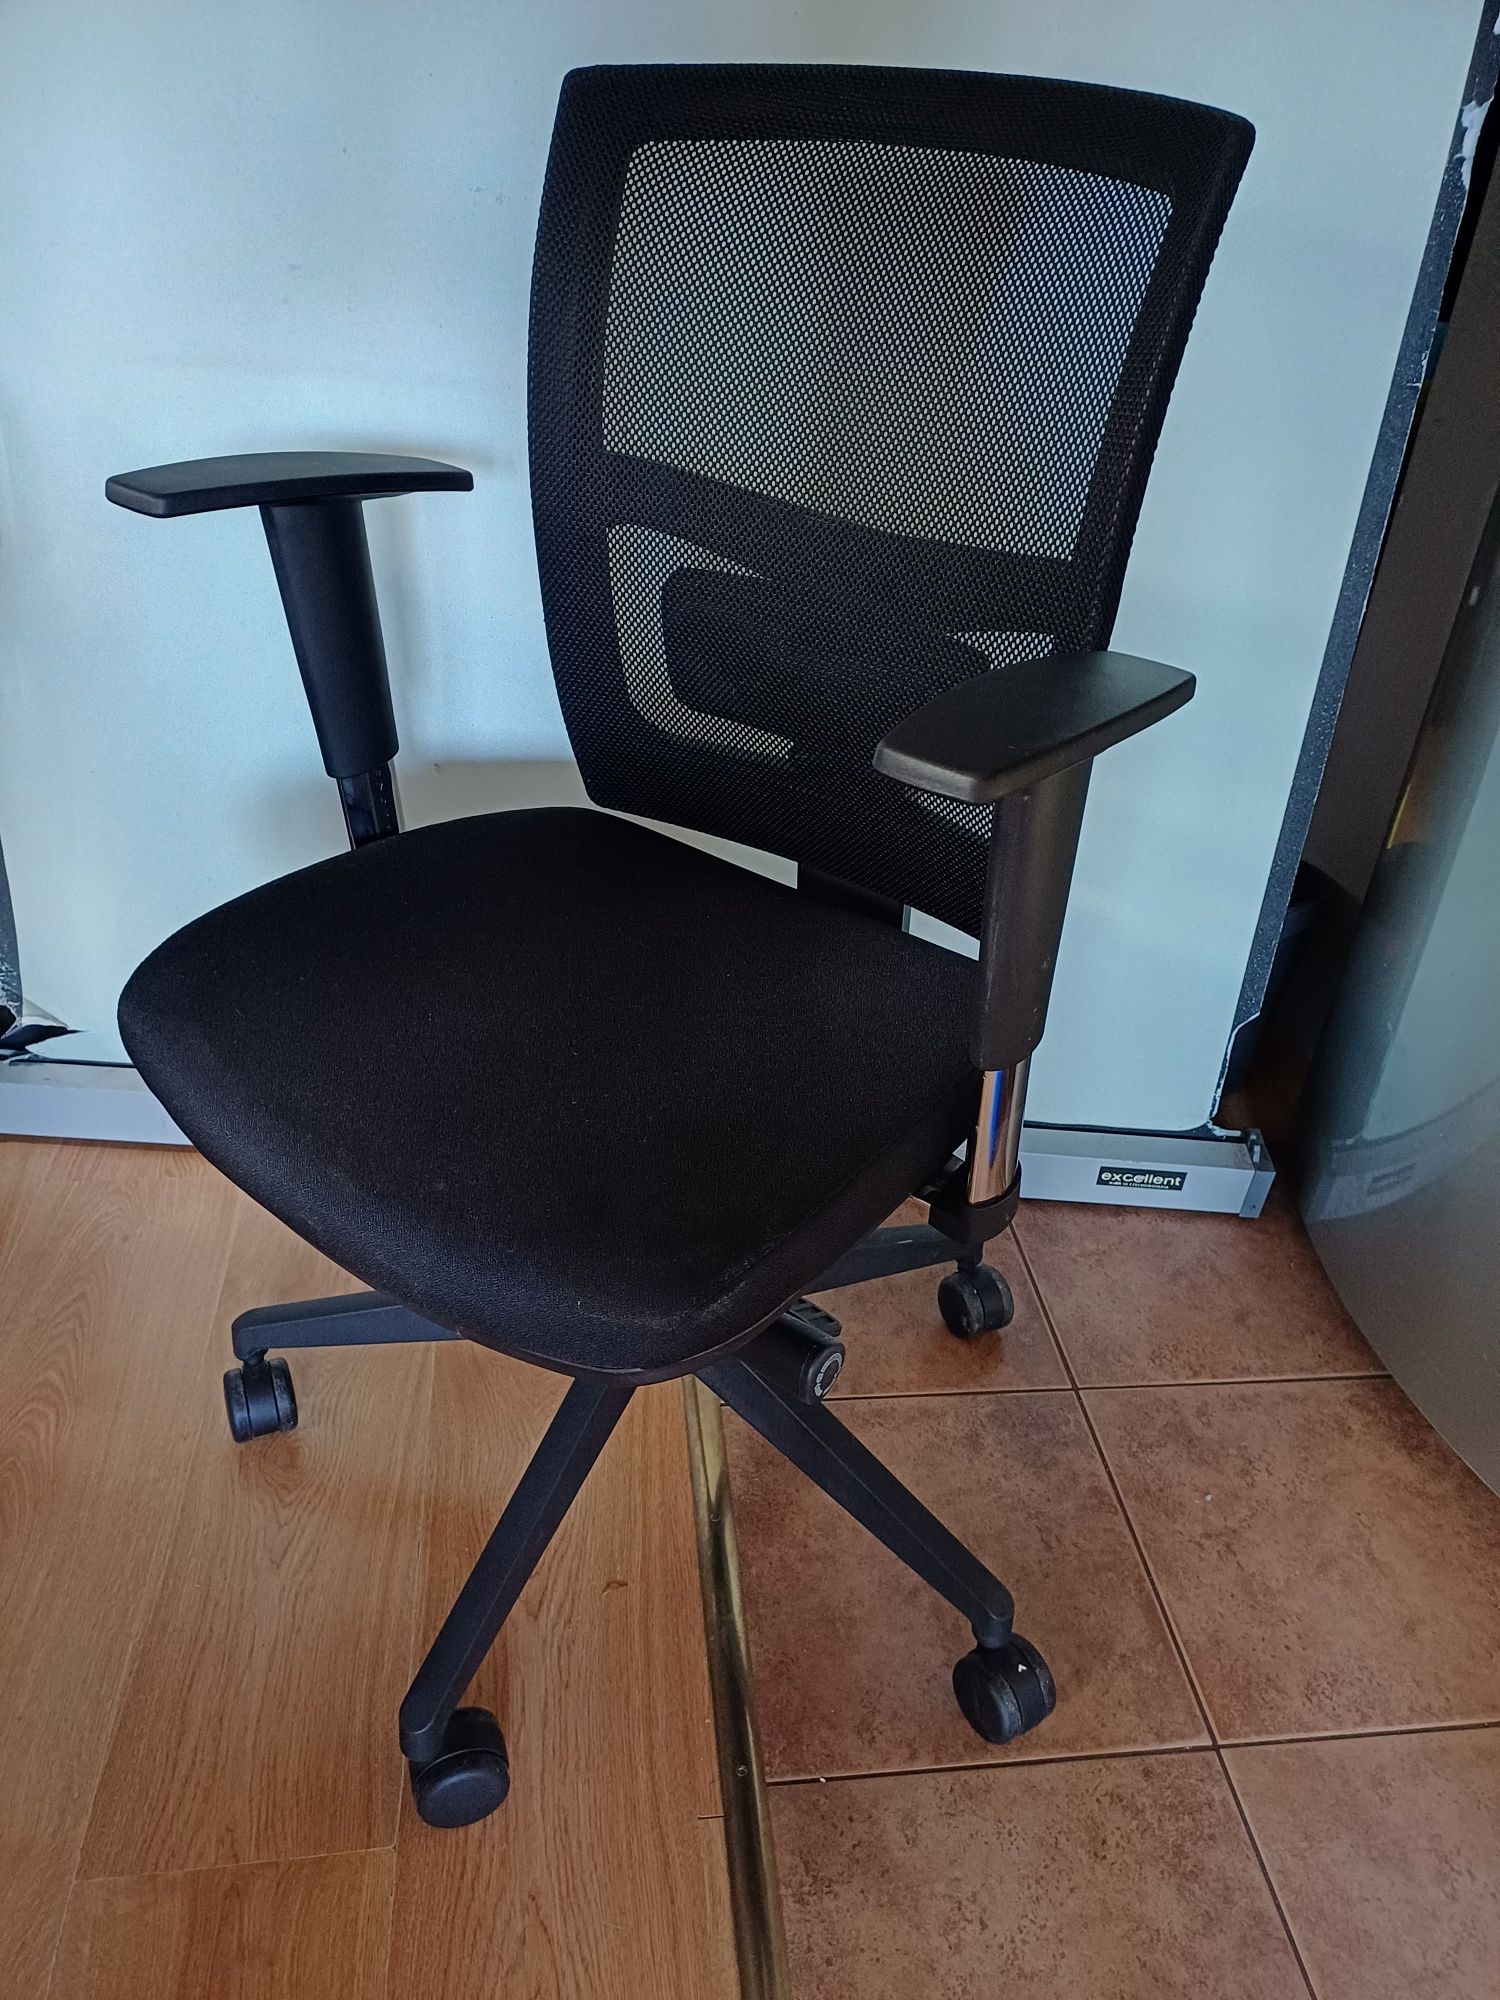 Krzeslo obrotowe KHG solidne regulowane